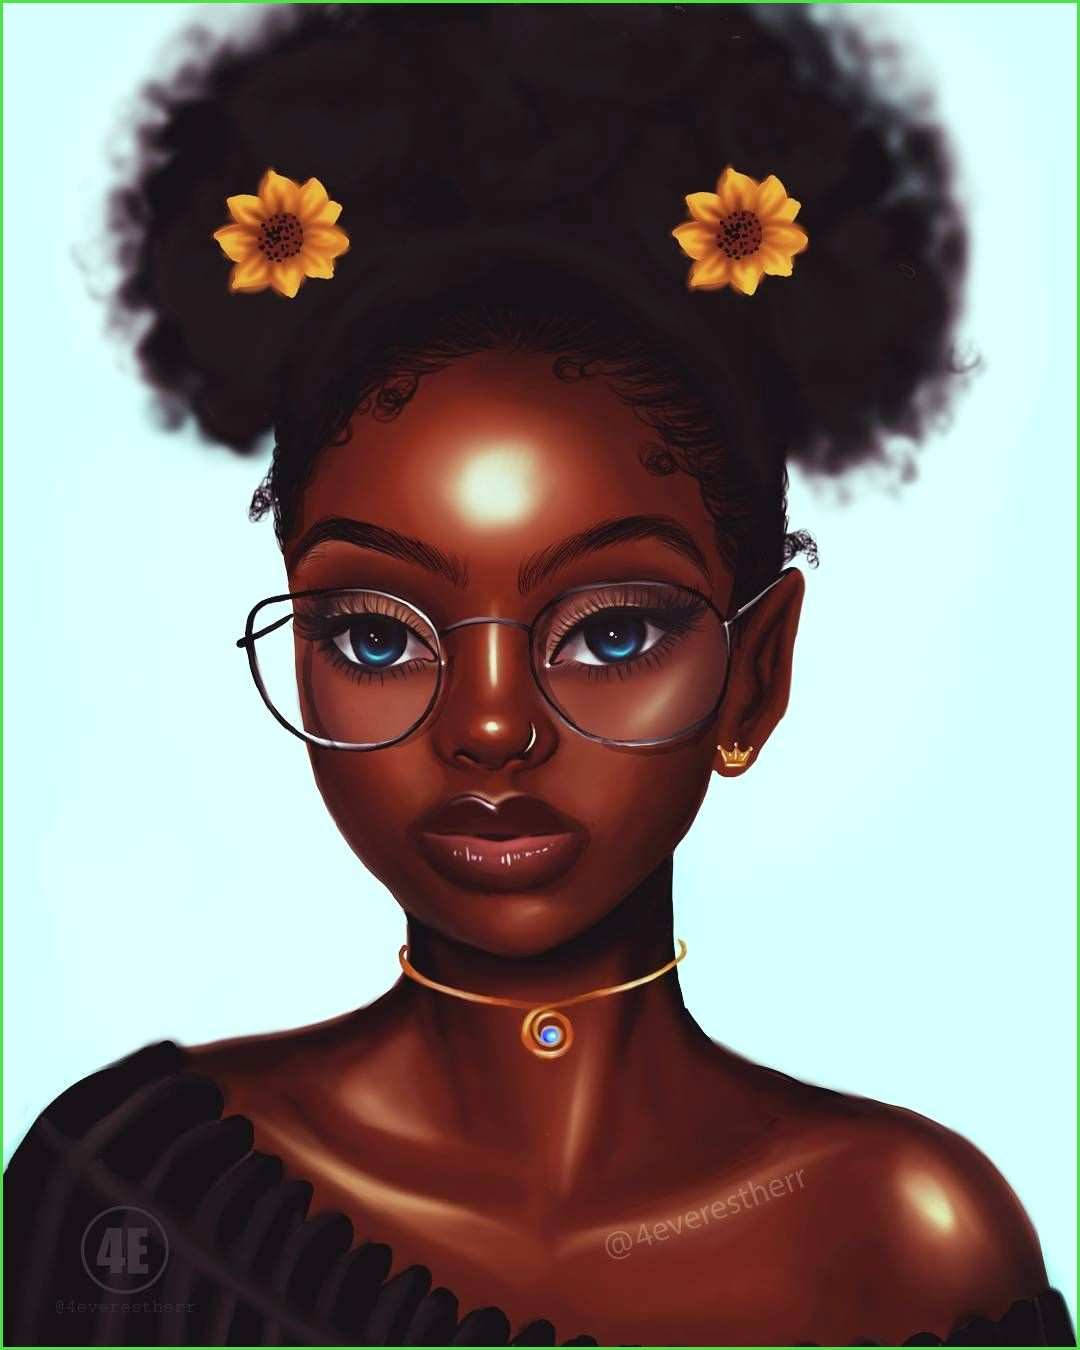 Free Cute Black Girl Wallpaper Downloads, Cute Black Girl Wallpaper for FREE